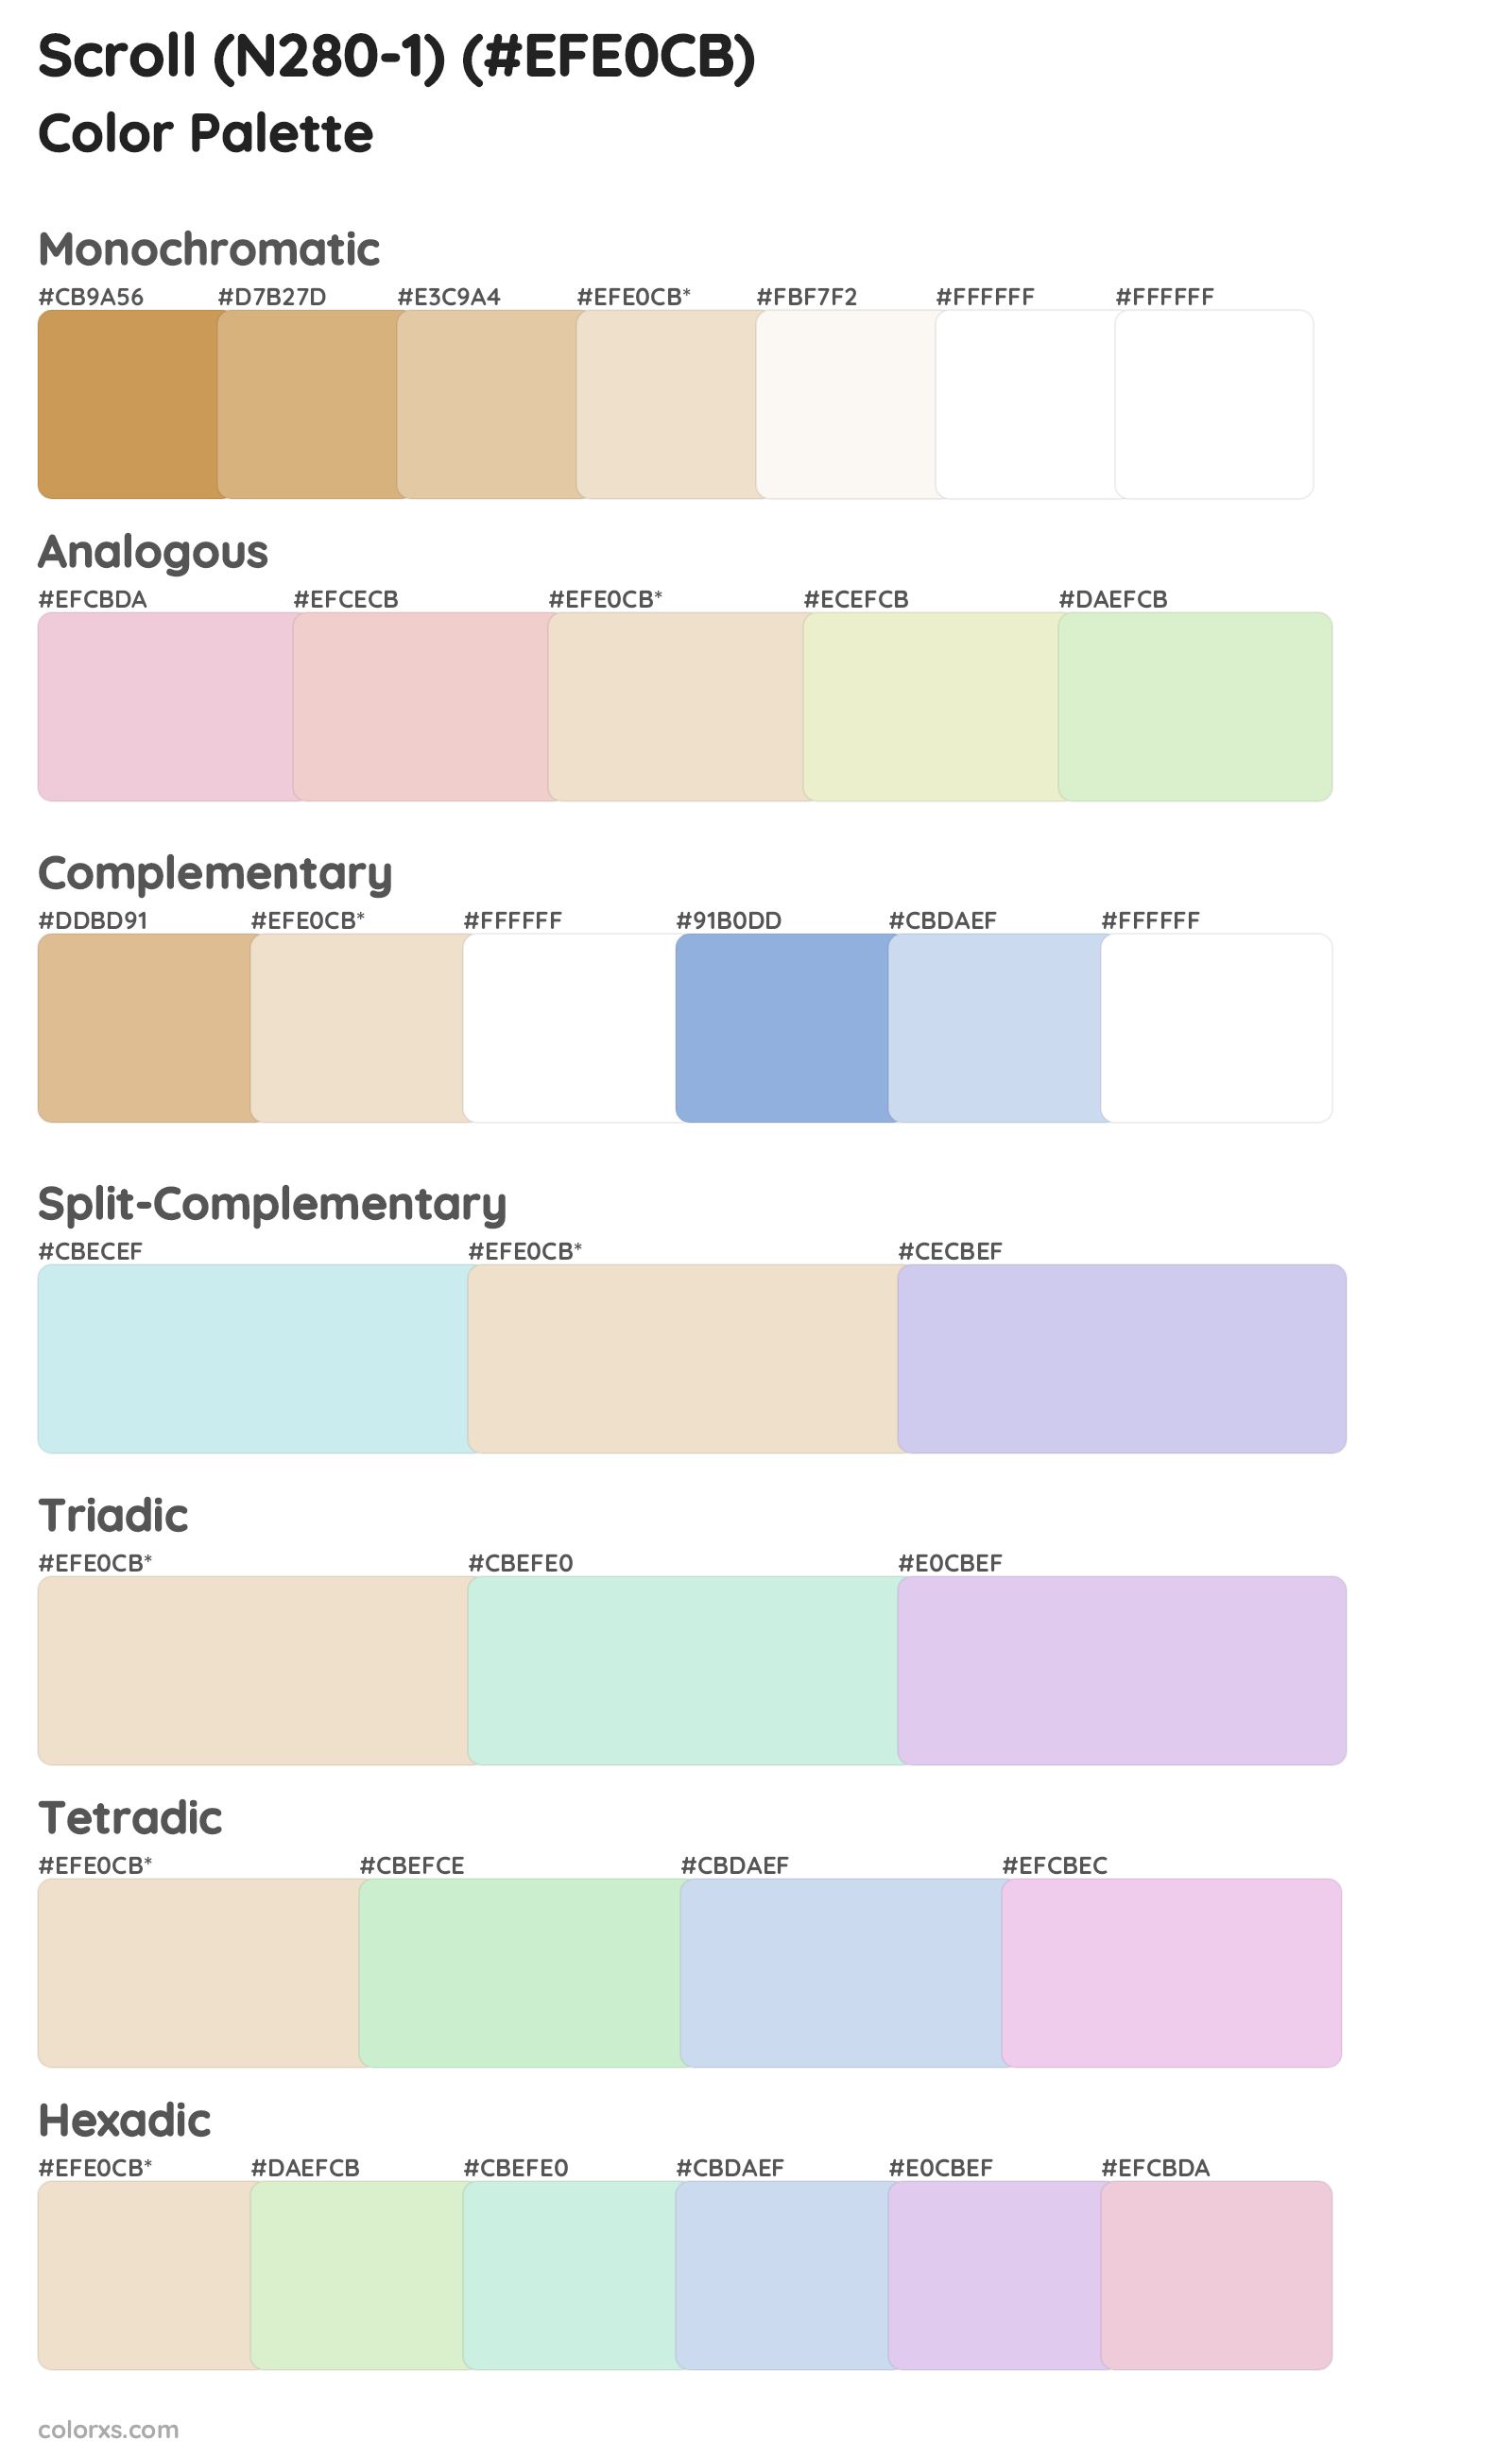 Scroll (N280-1) Color Scheme Palettes